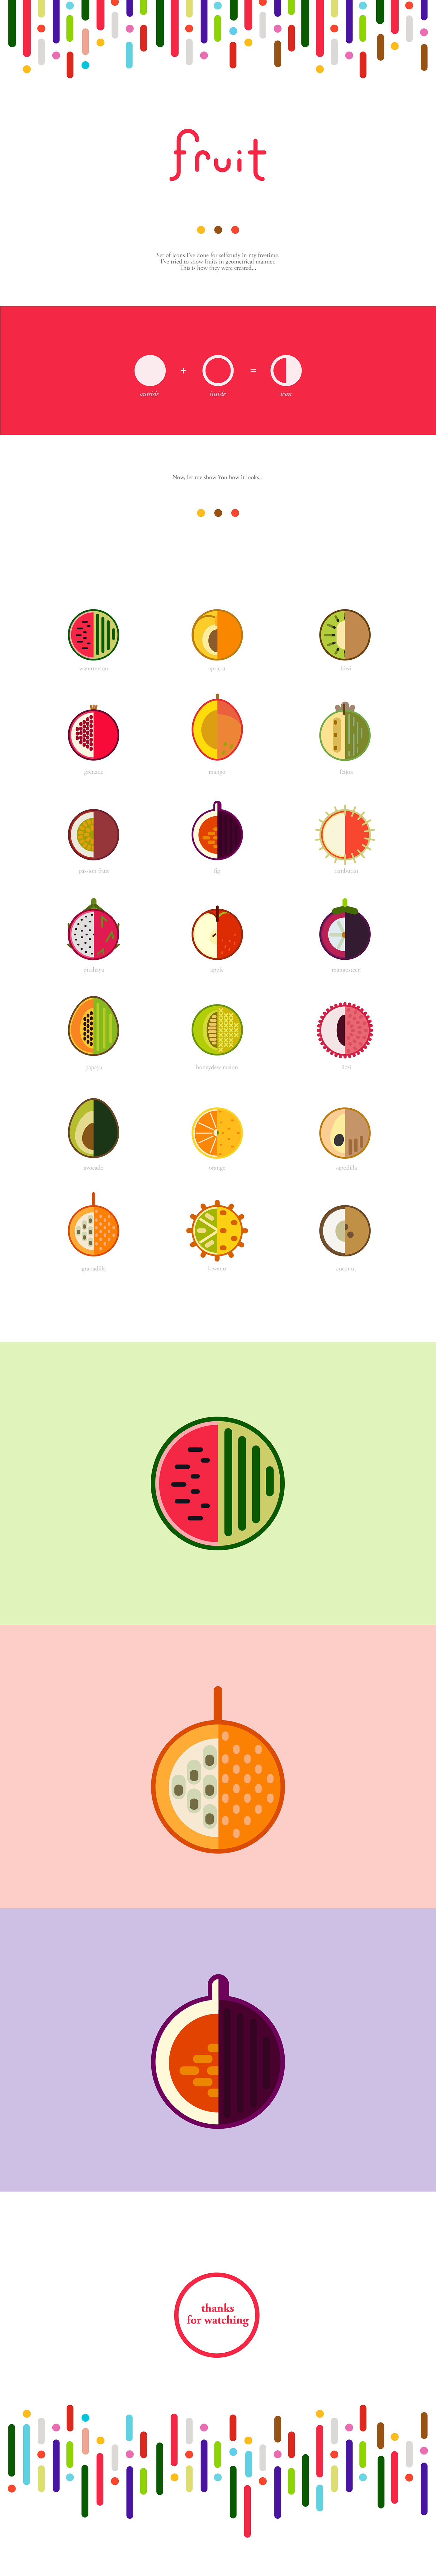 icon set fruits simple geometric icons colors Minimalism graphic elements app